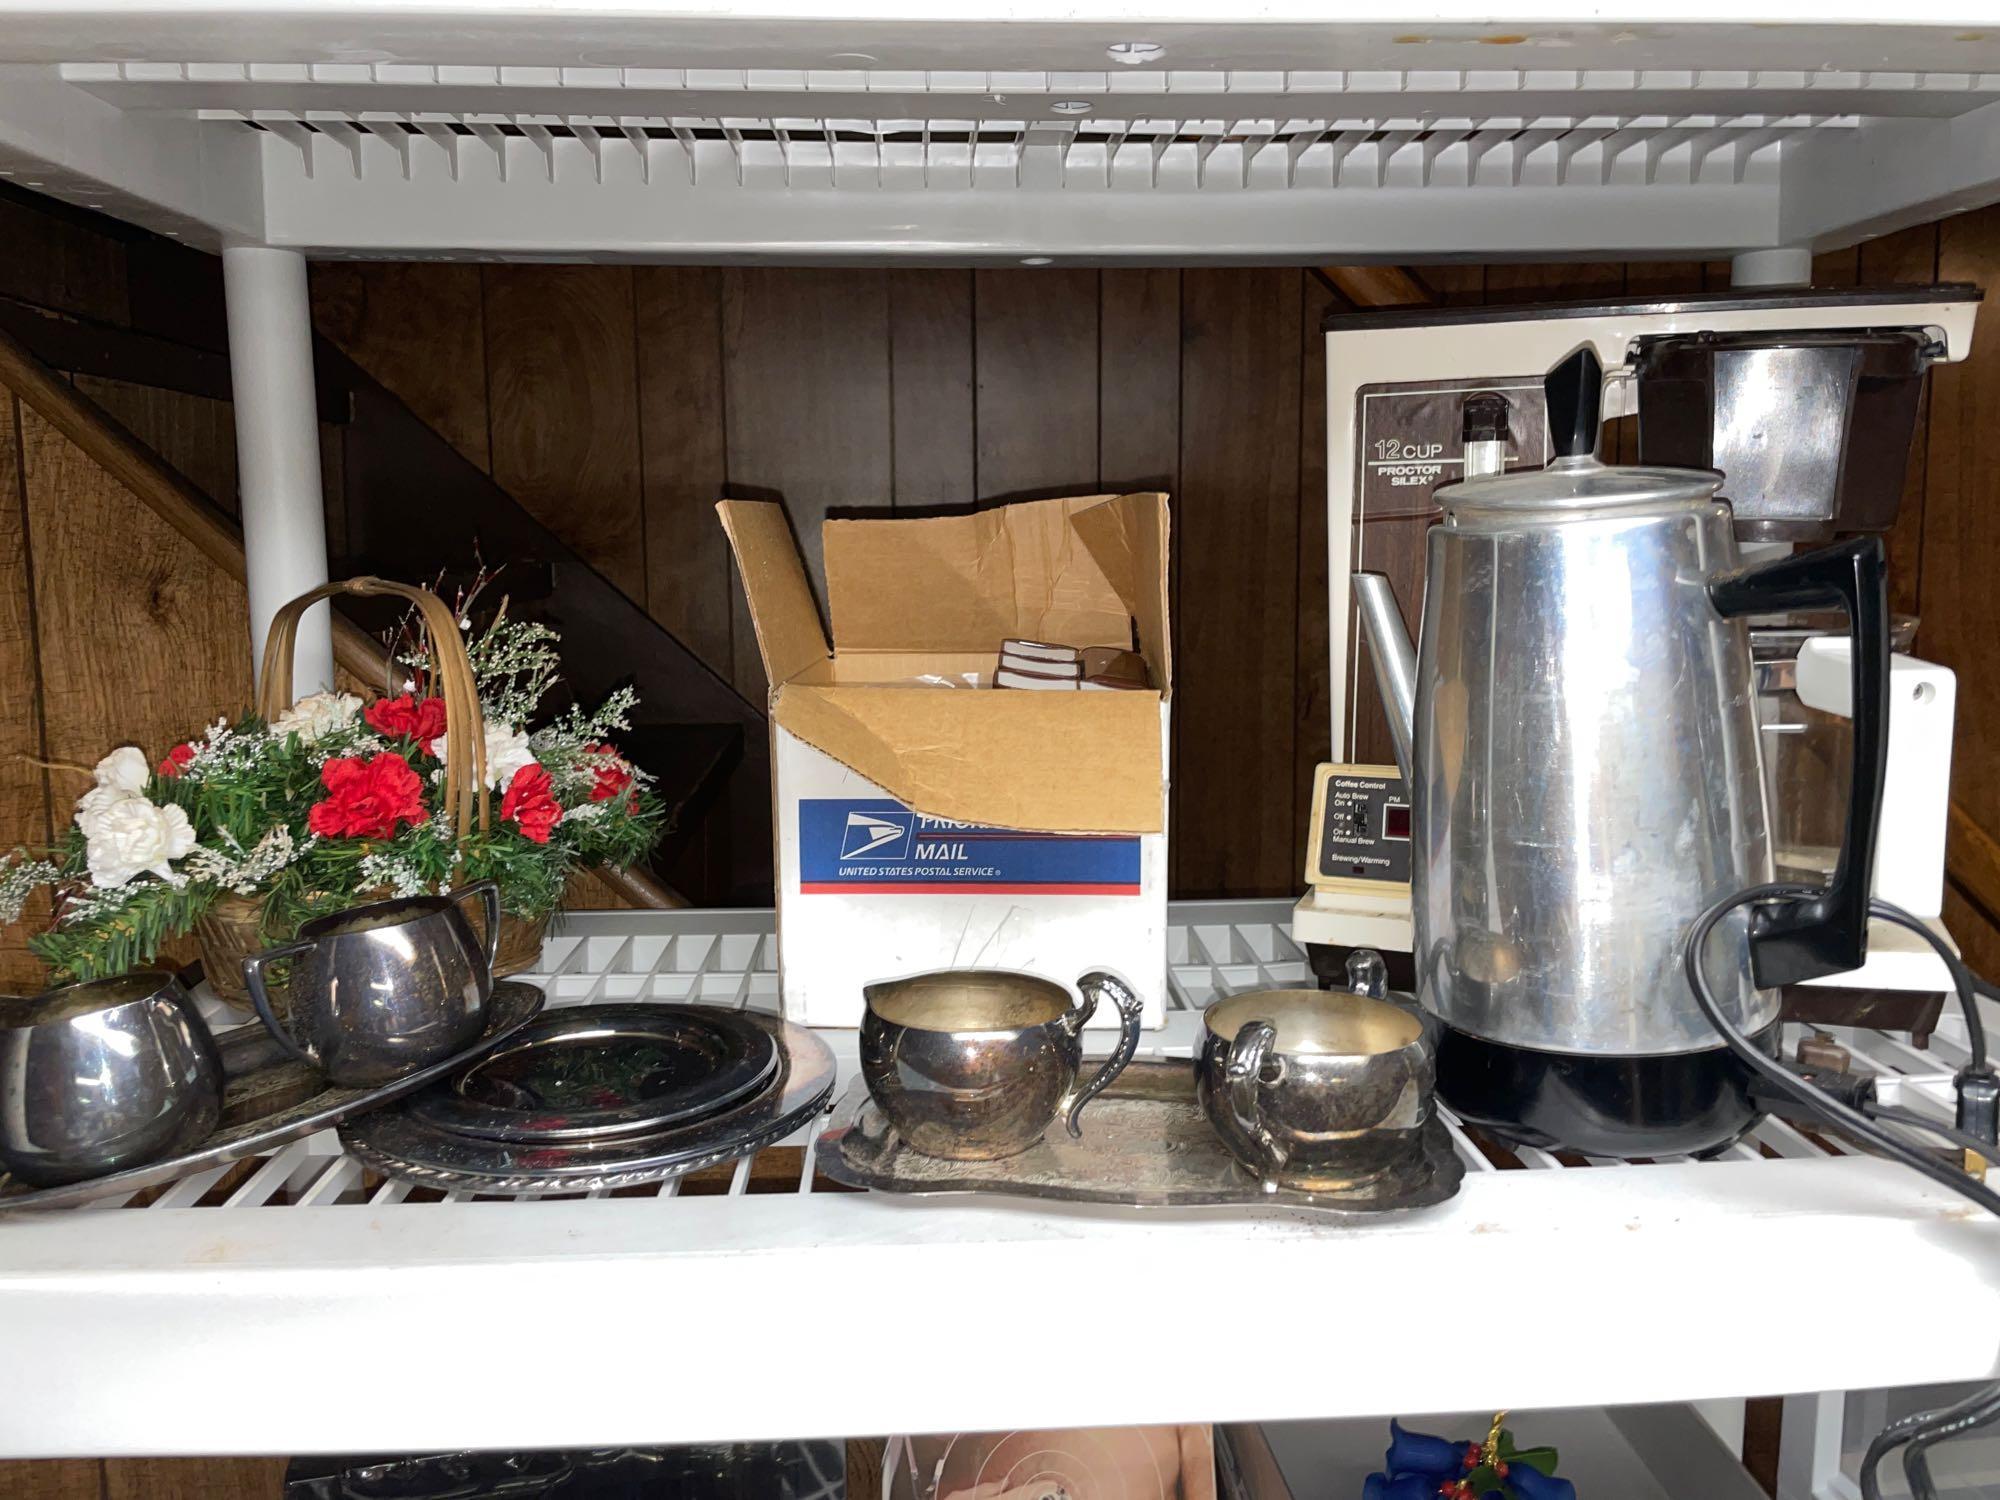 Holiday decor items - coffee maker - train phone - etc